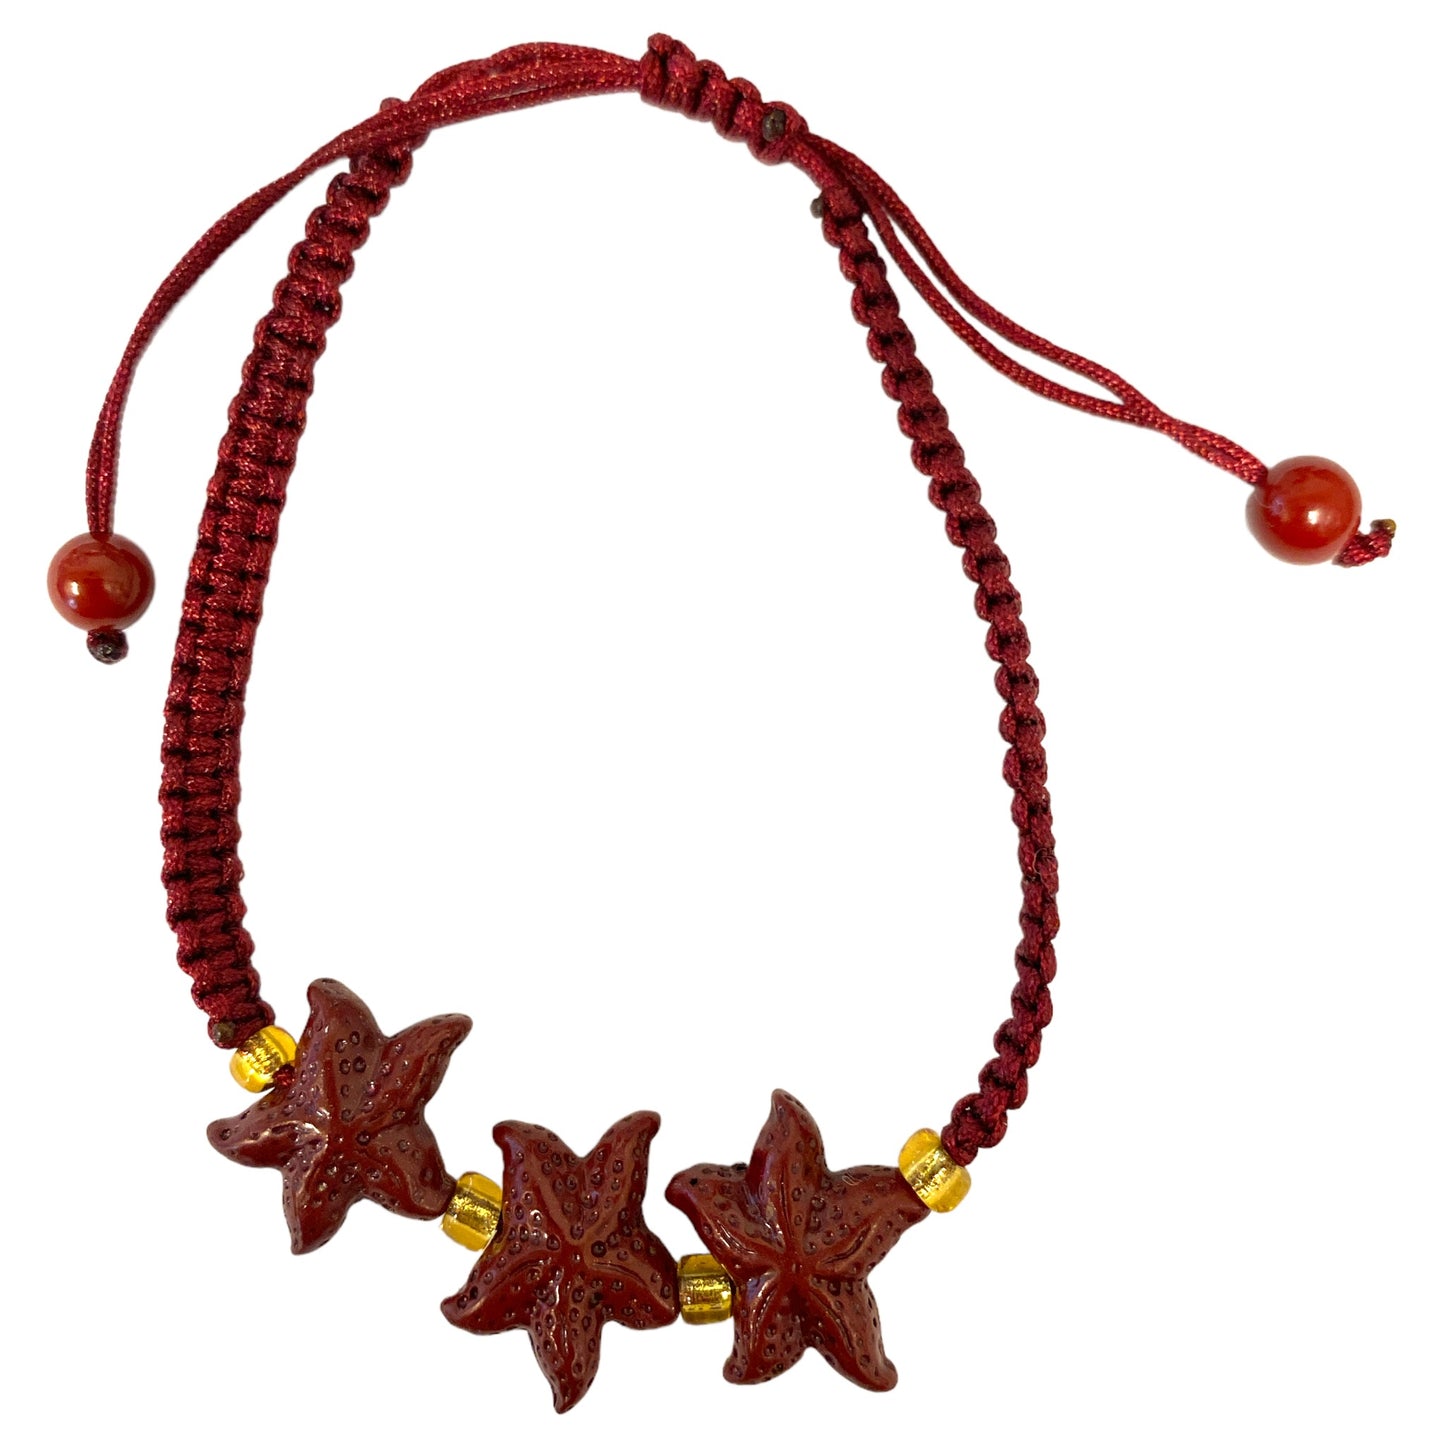 Tibetan Cinnabar 3 Starfish with 2 Tassels Braided Bracelet Mala - Approx 7.5 Inch - China - NEW123